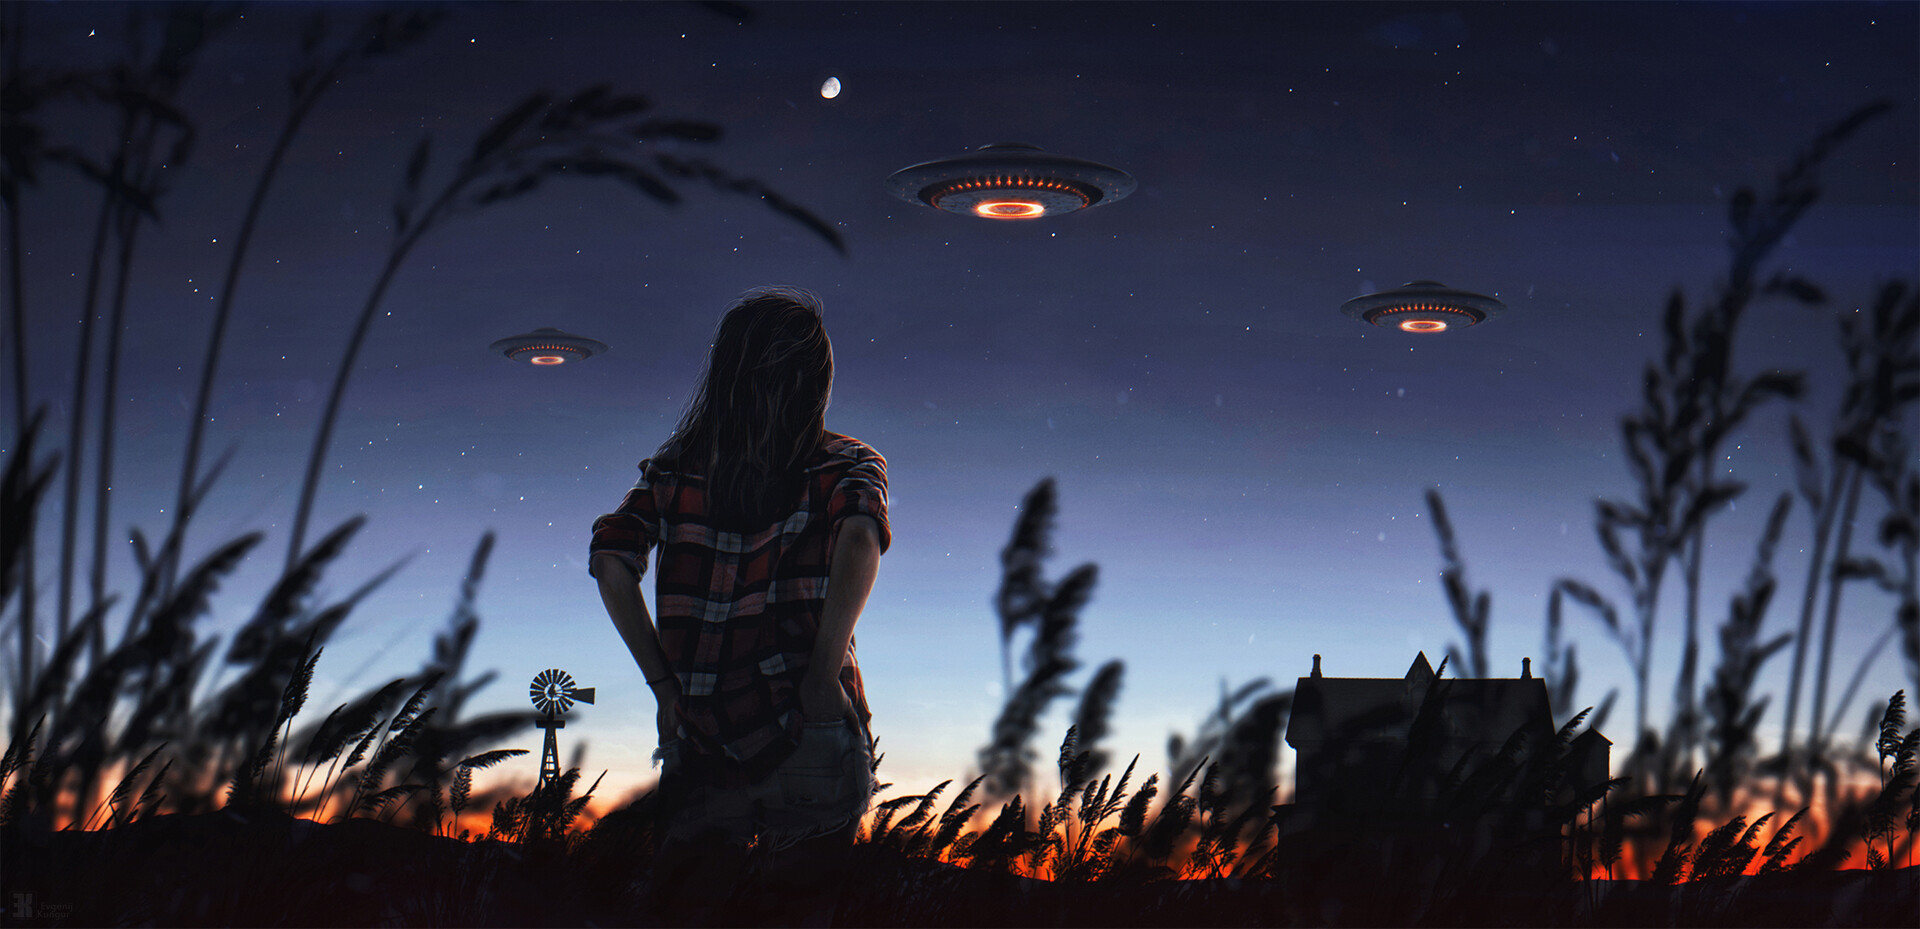 ArtStation Digital Art Concept Art Artwork UFO UFOs Field Evgenij Kungur 1920x929